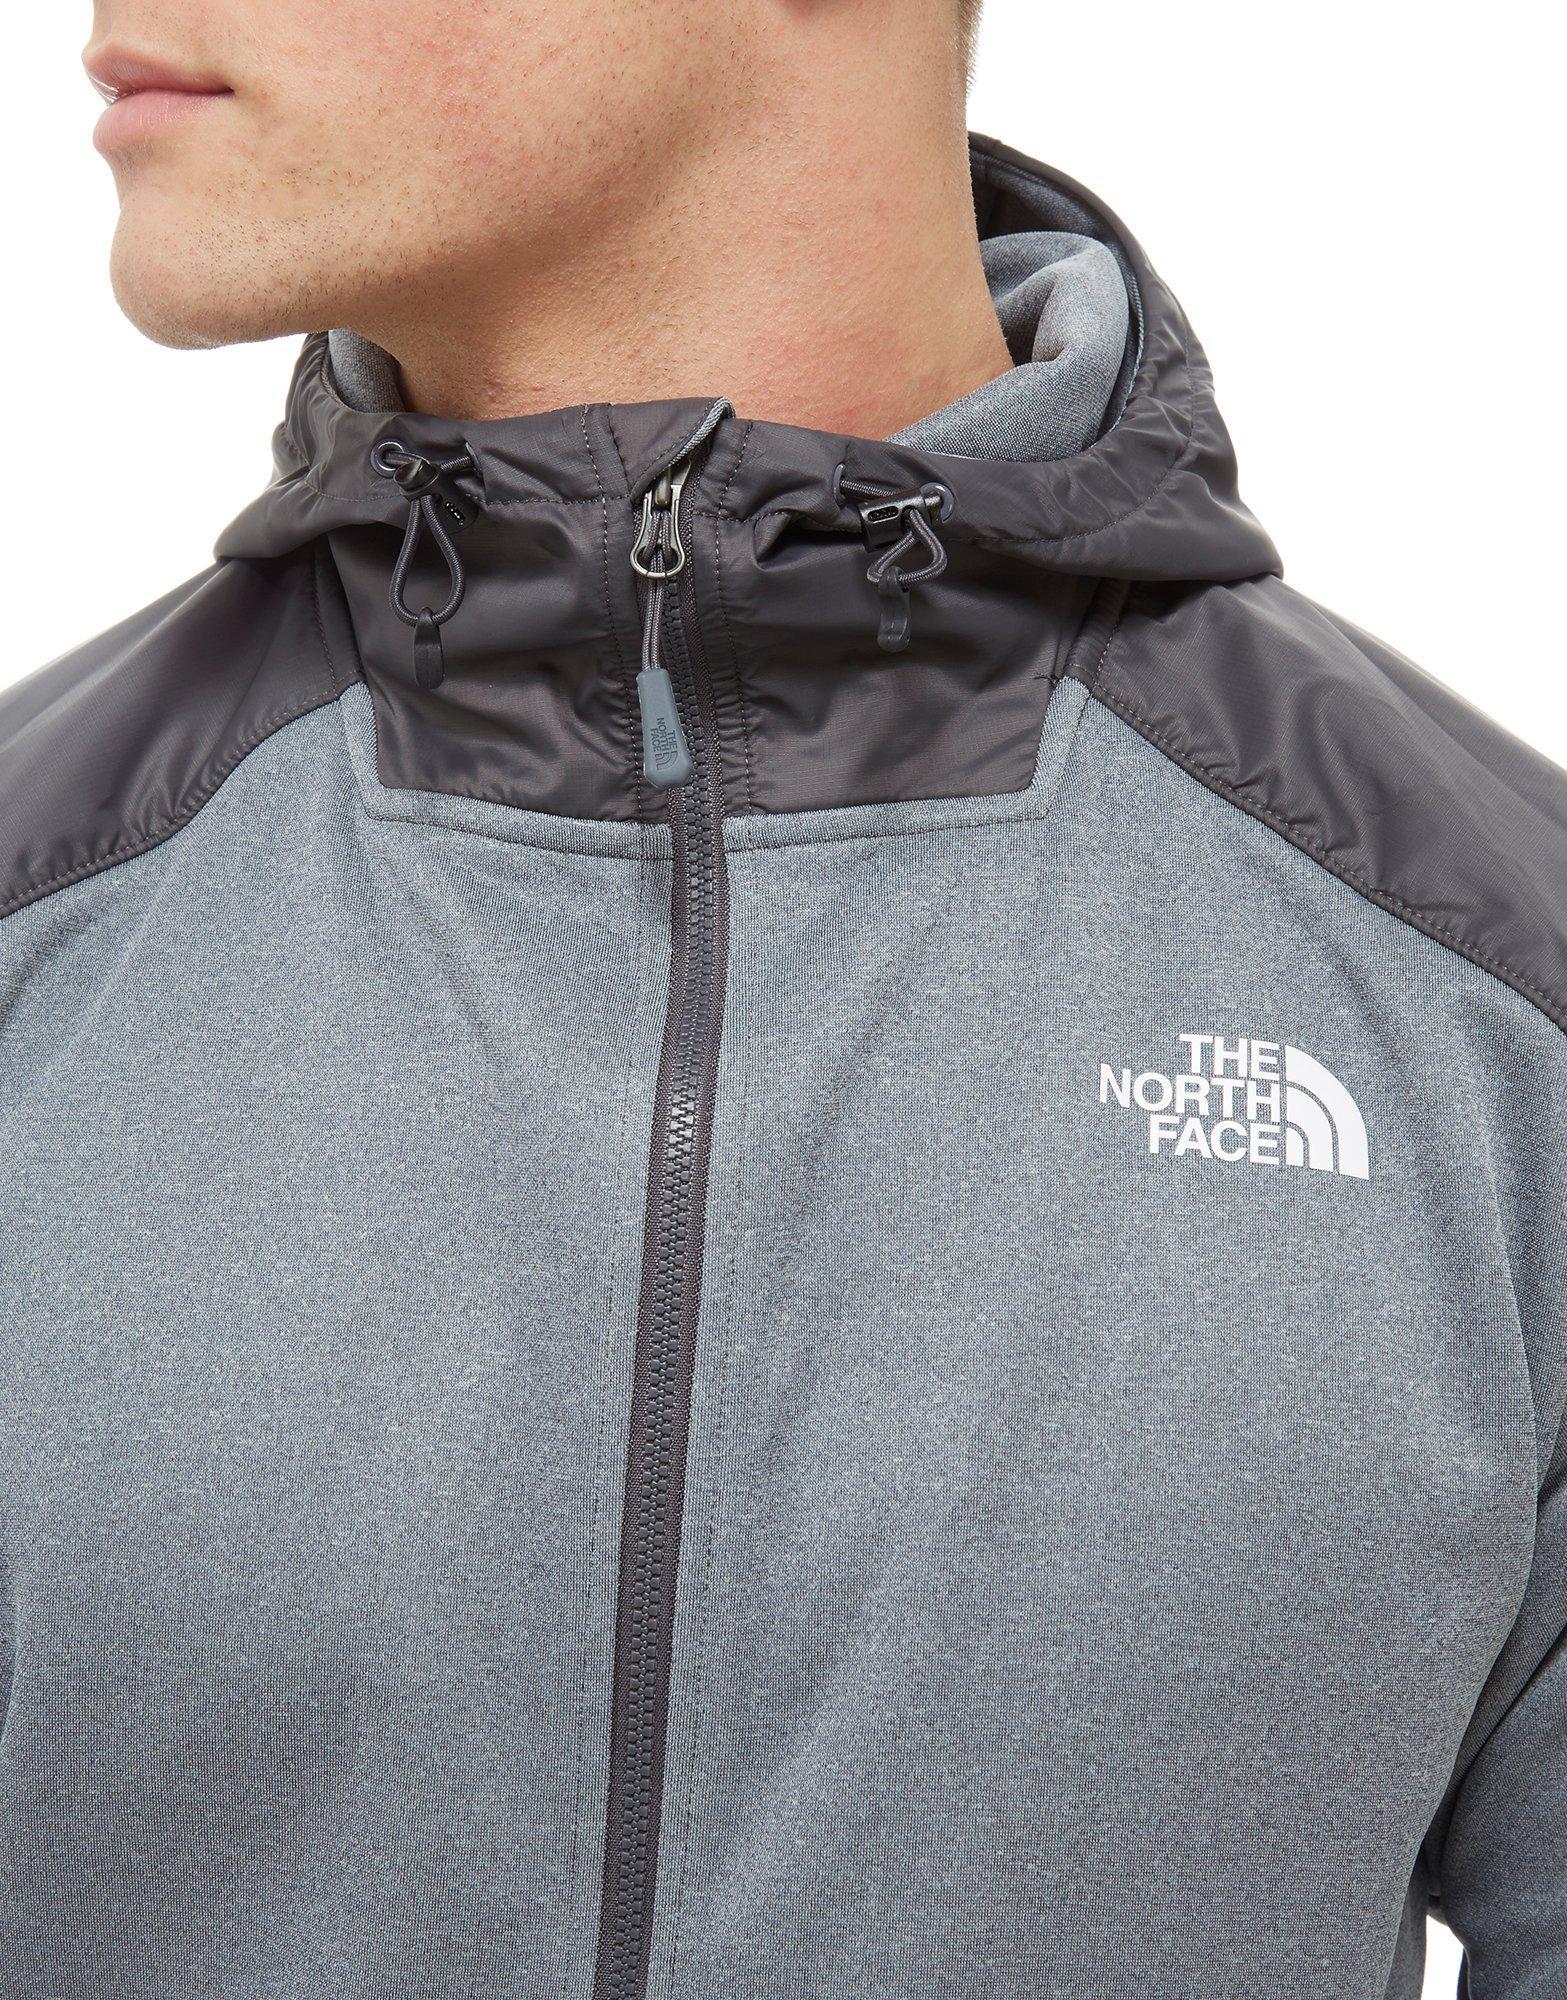 north face grey zip up hoodie